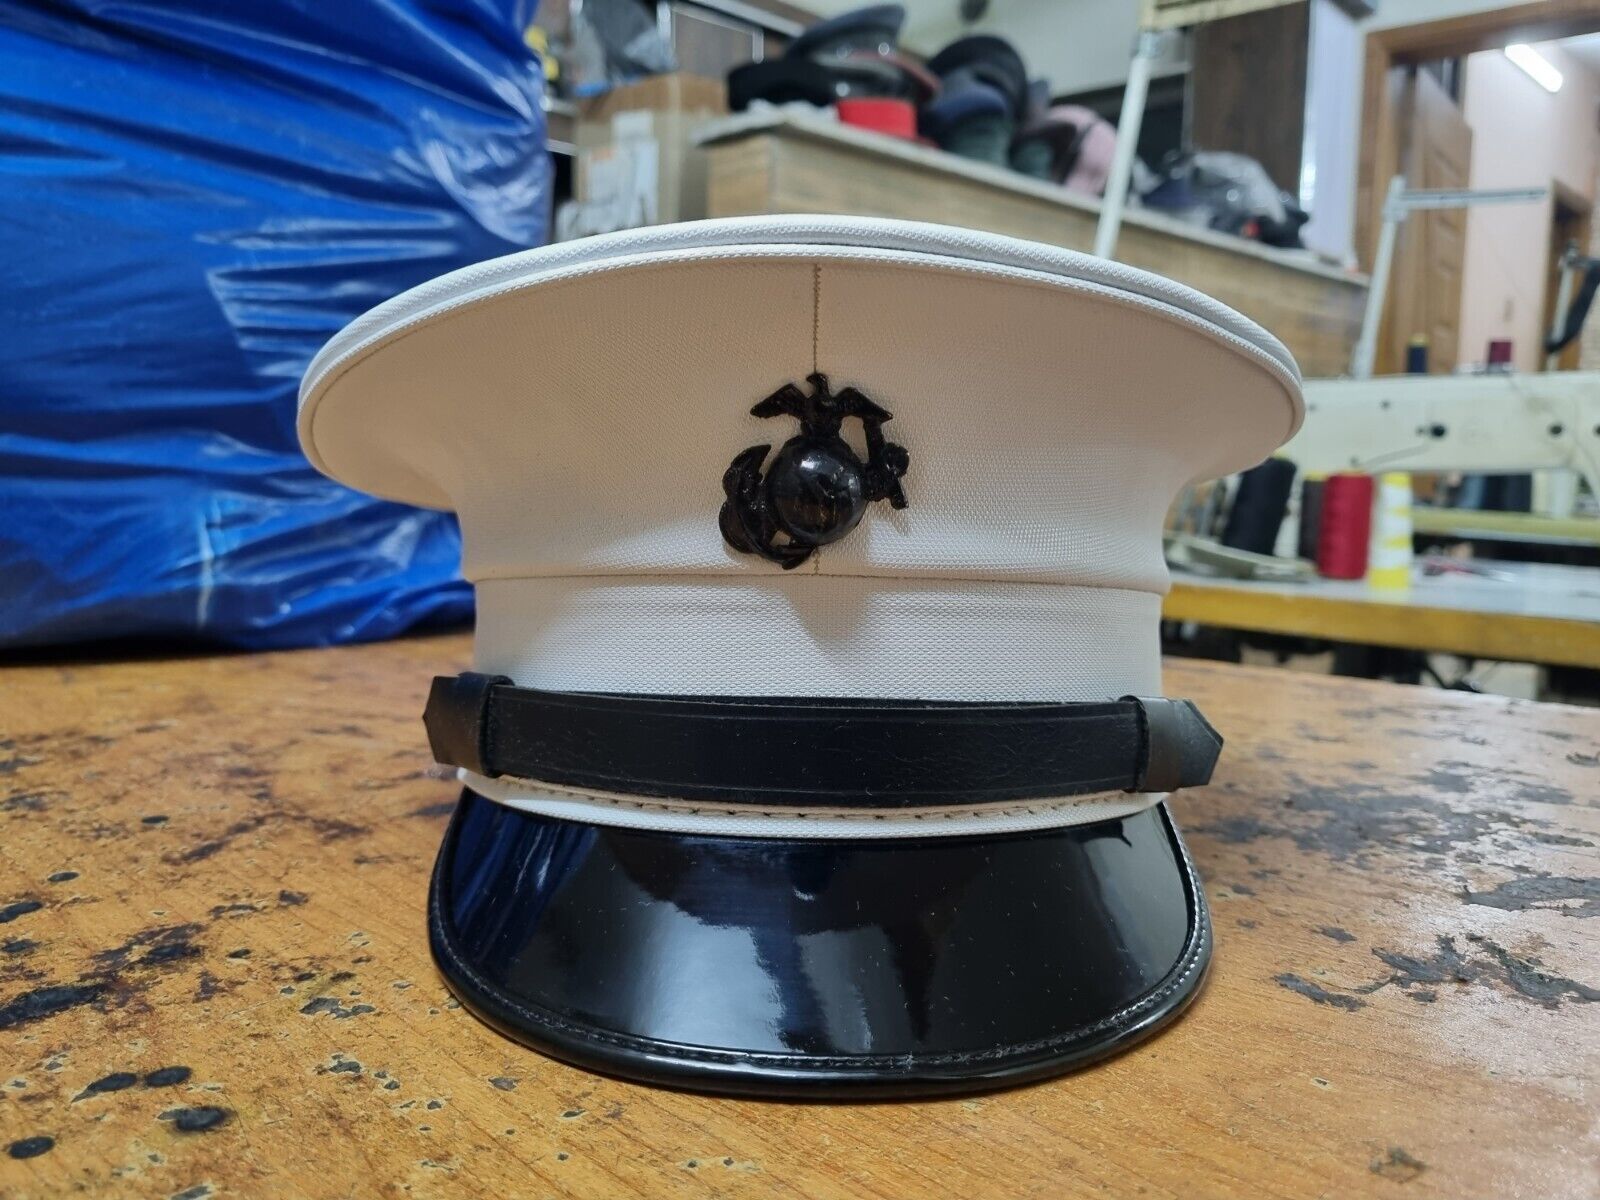 USMC Dress blues marine hat - With carrying case - White vinyl - never worn